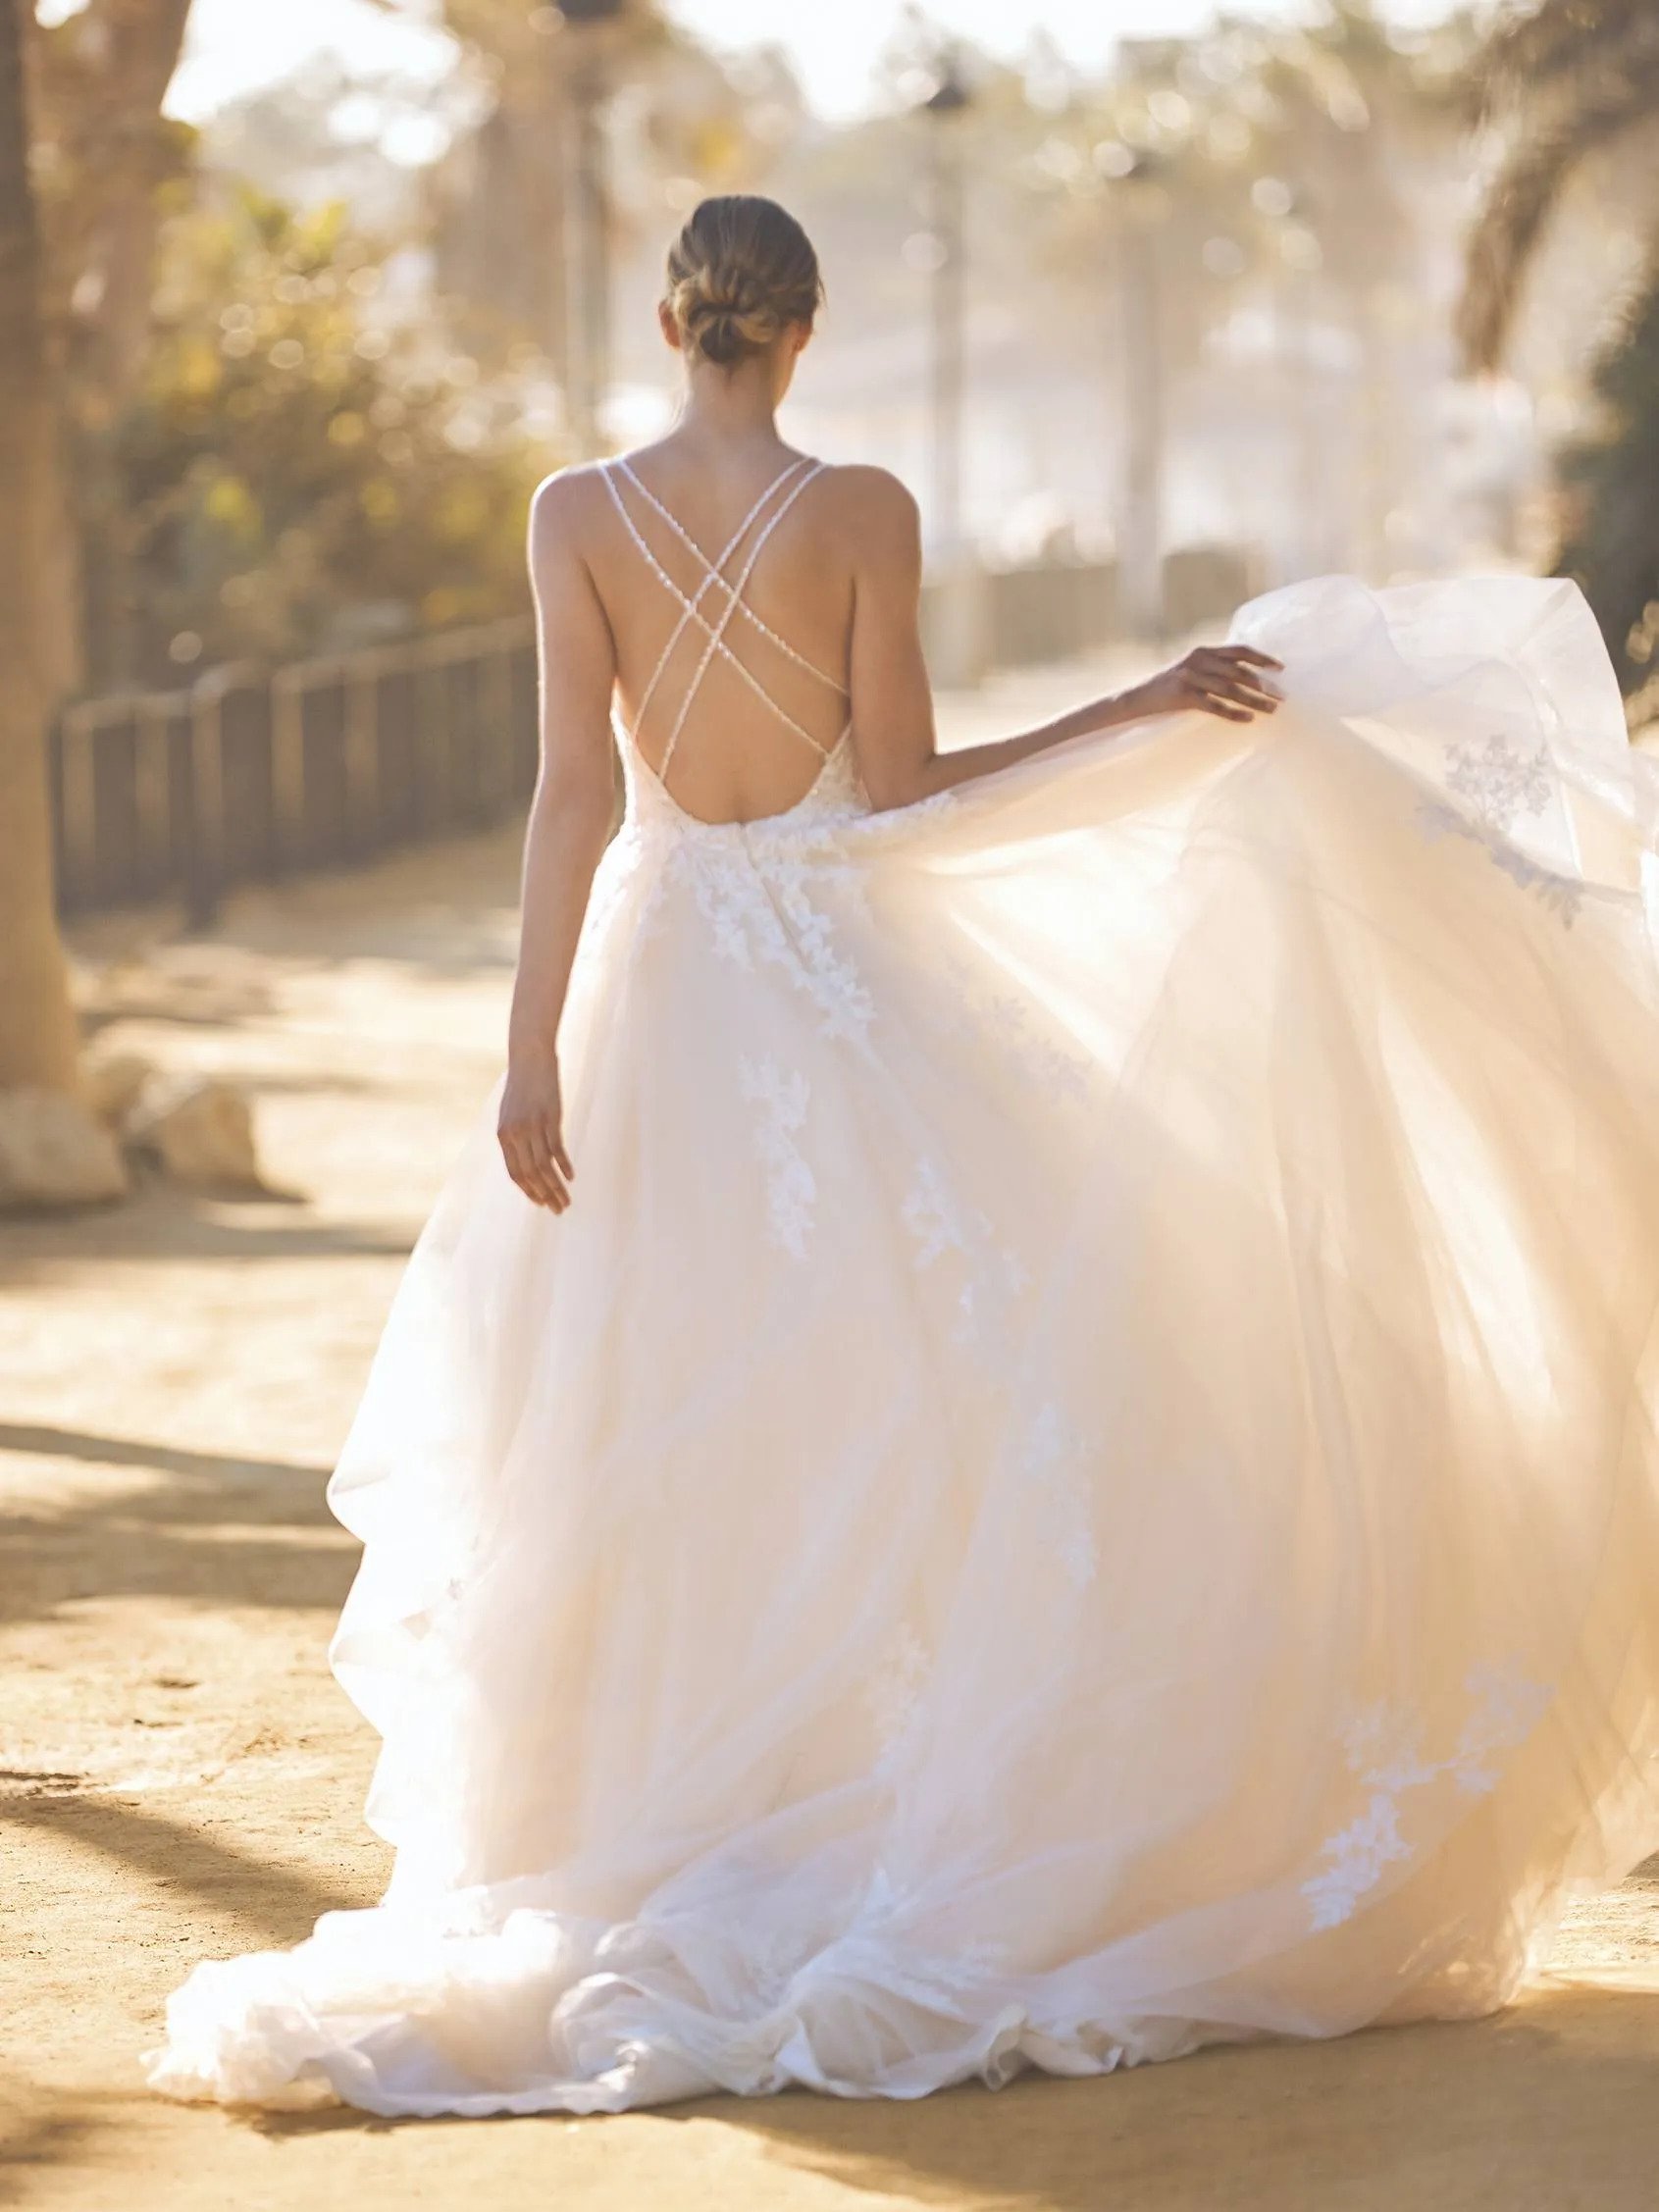 blanc-de-blanc-bridal-boutique-pittsburgh-dress-wedding-gown-thalia.jpg